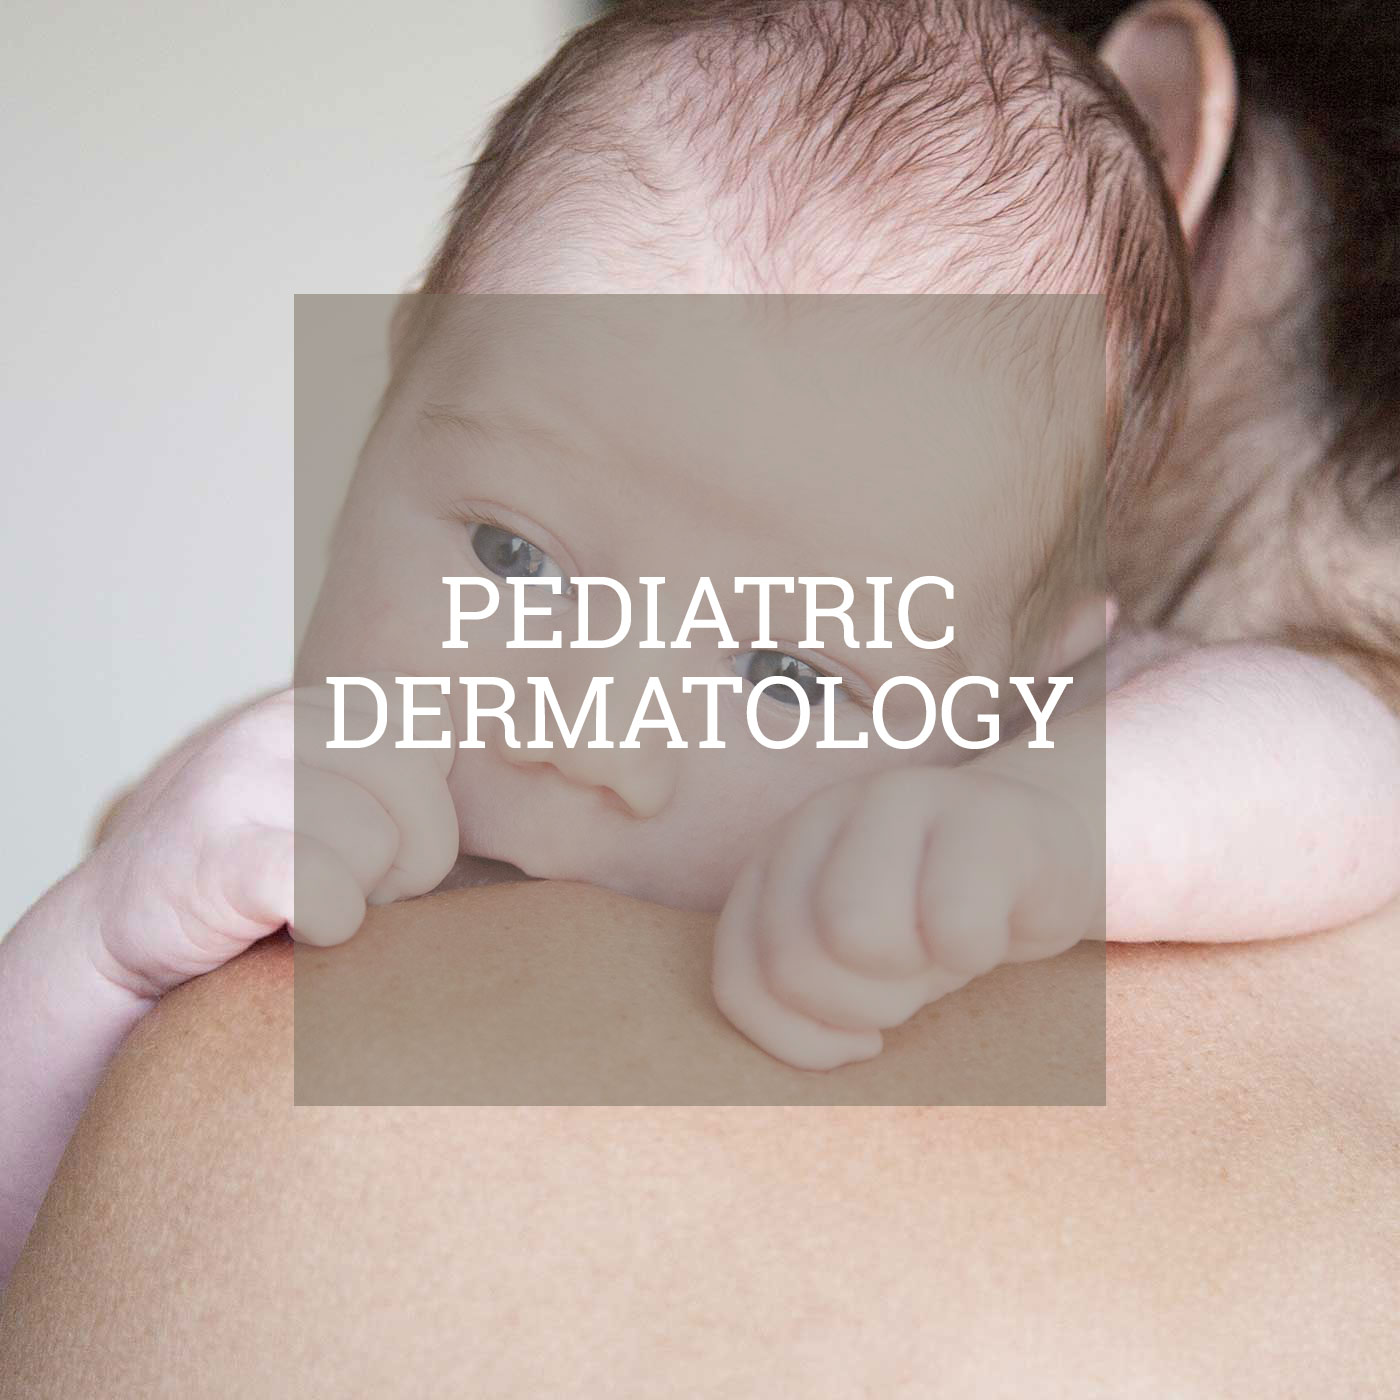 Pediatric Dermatology - Epidermos Instituto de dermoestética